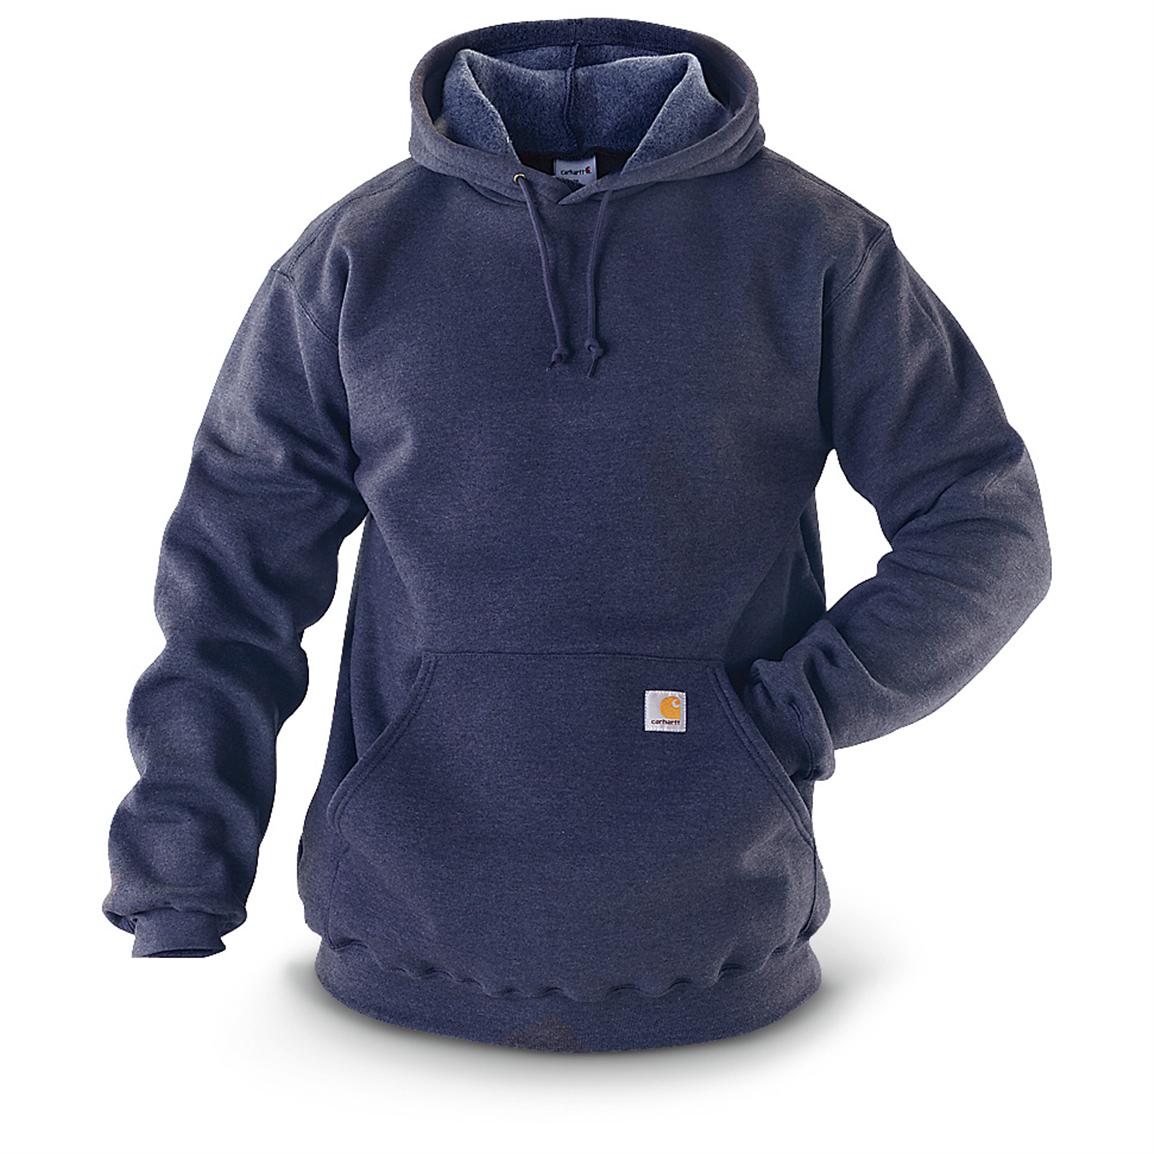 Carhartt® Men's Midweight Hooded Pullover Sweatshirt, Navy